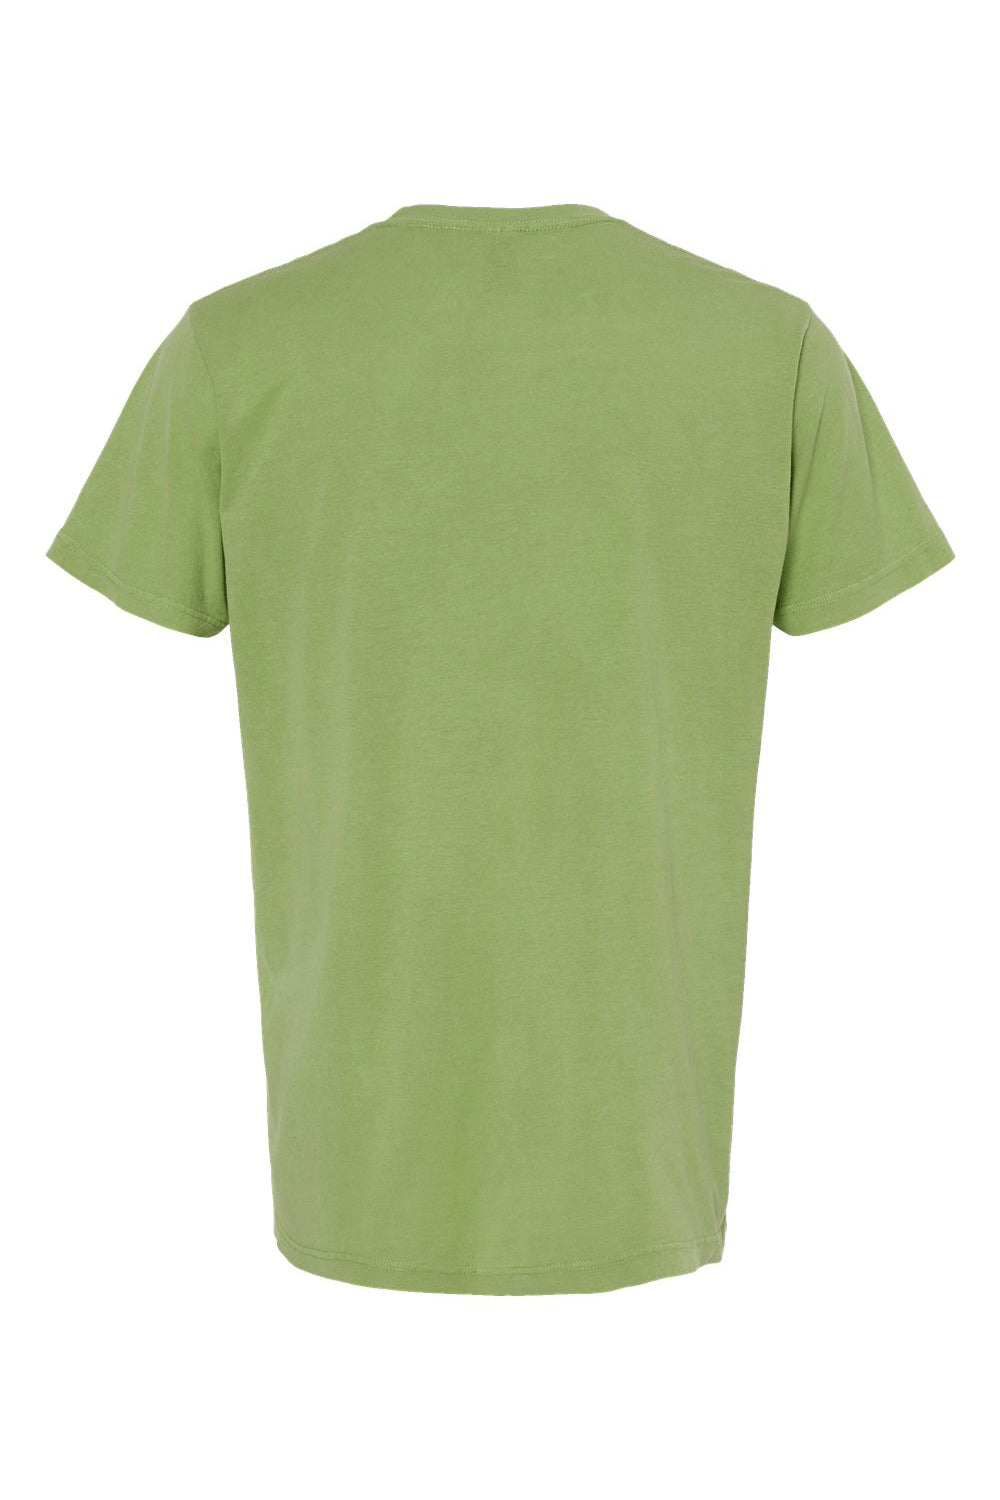 M&O 6500M Mens Vintage Garment Dyed Short Sleeve Crewneck T-Shirt Aloe Green Flat Back